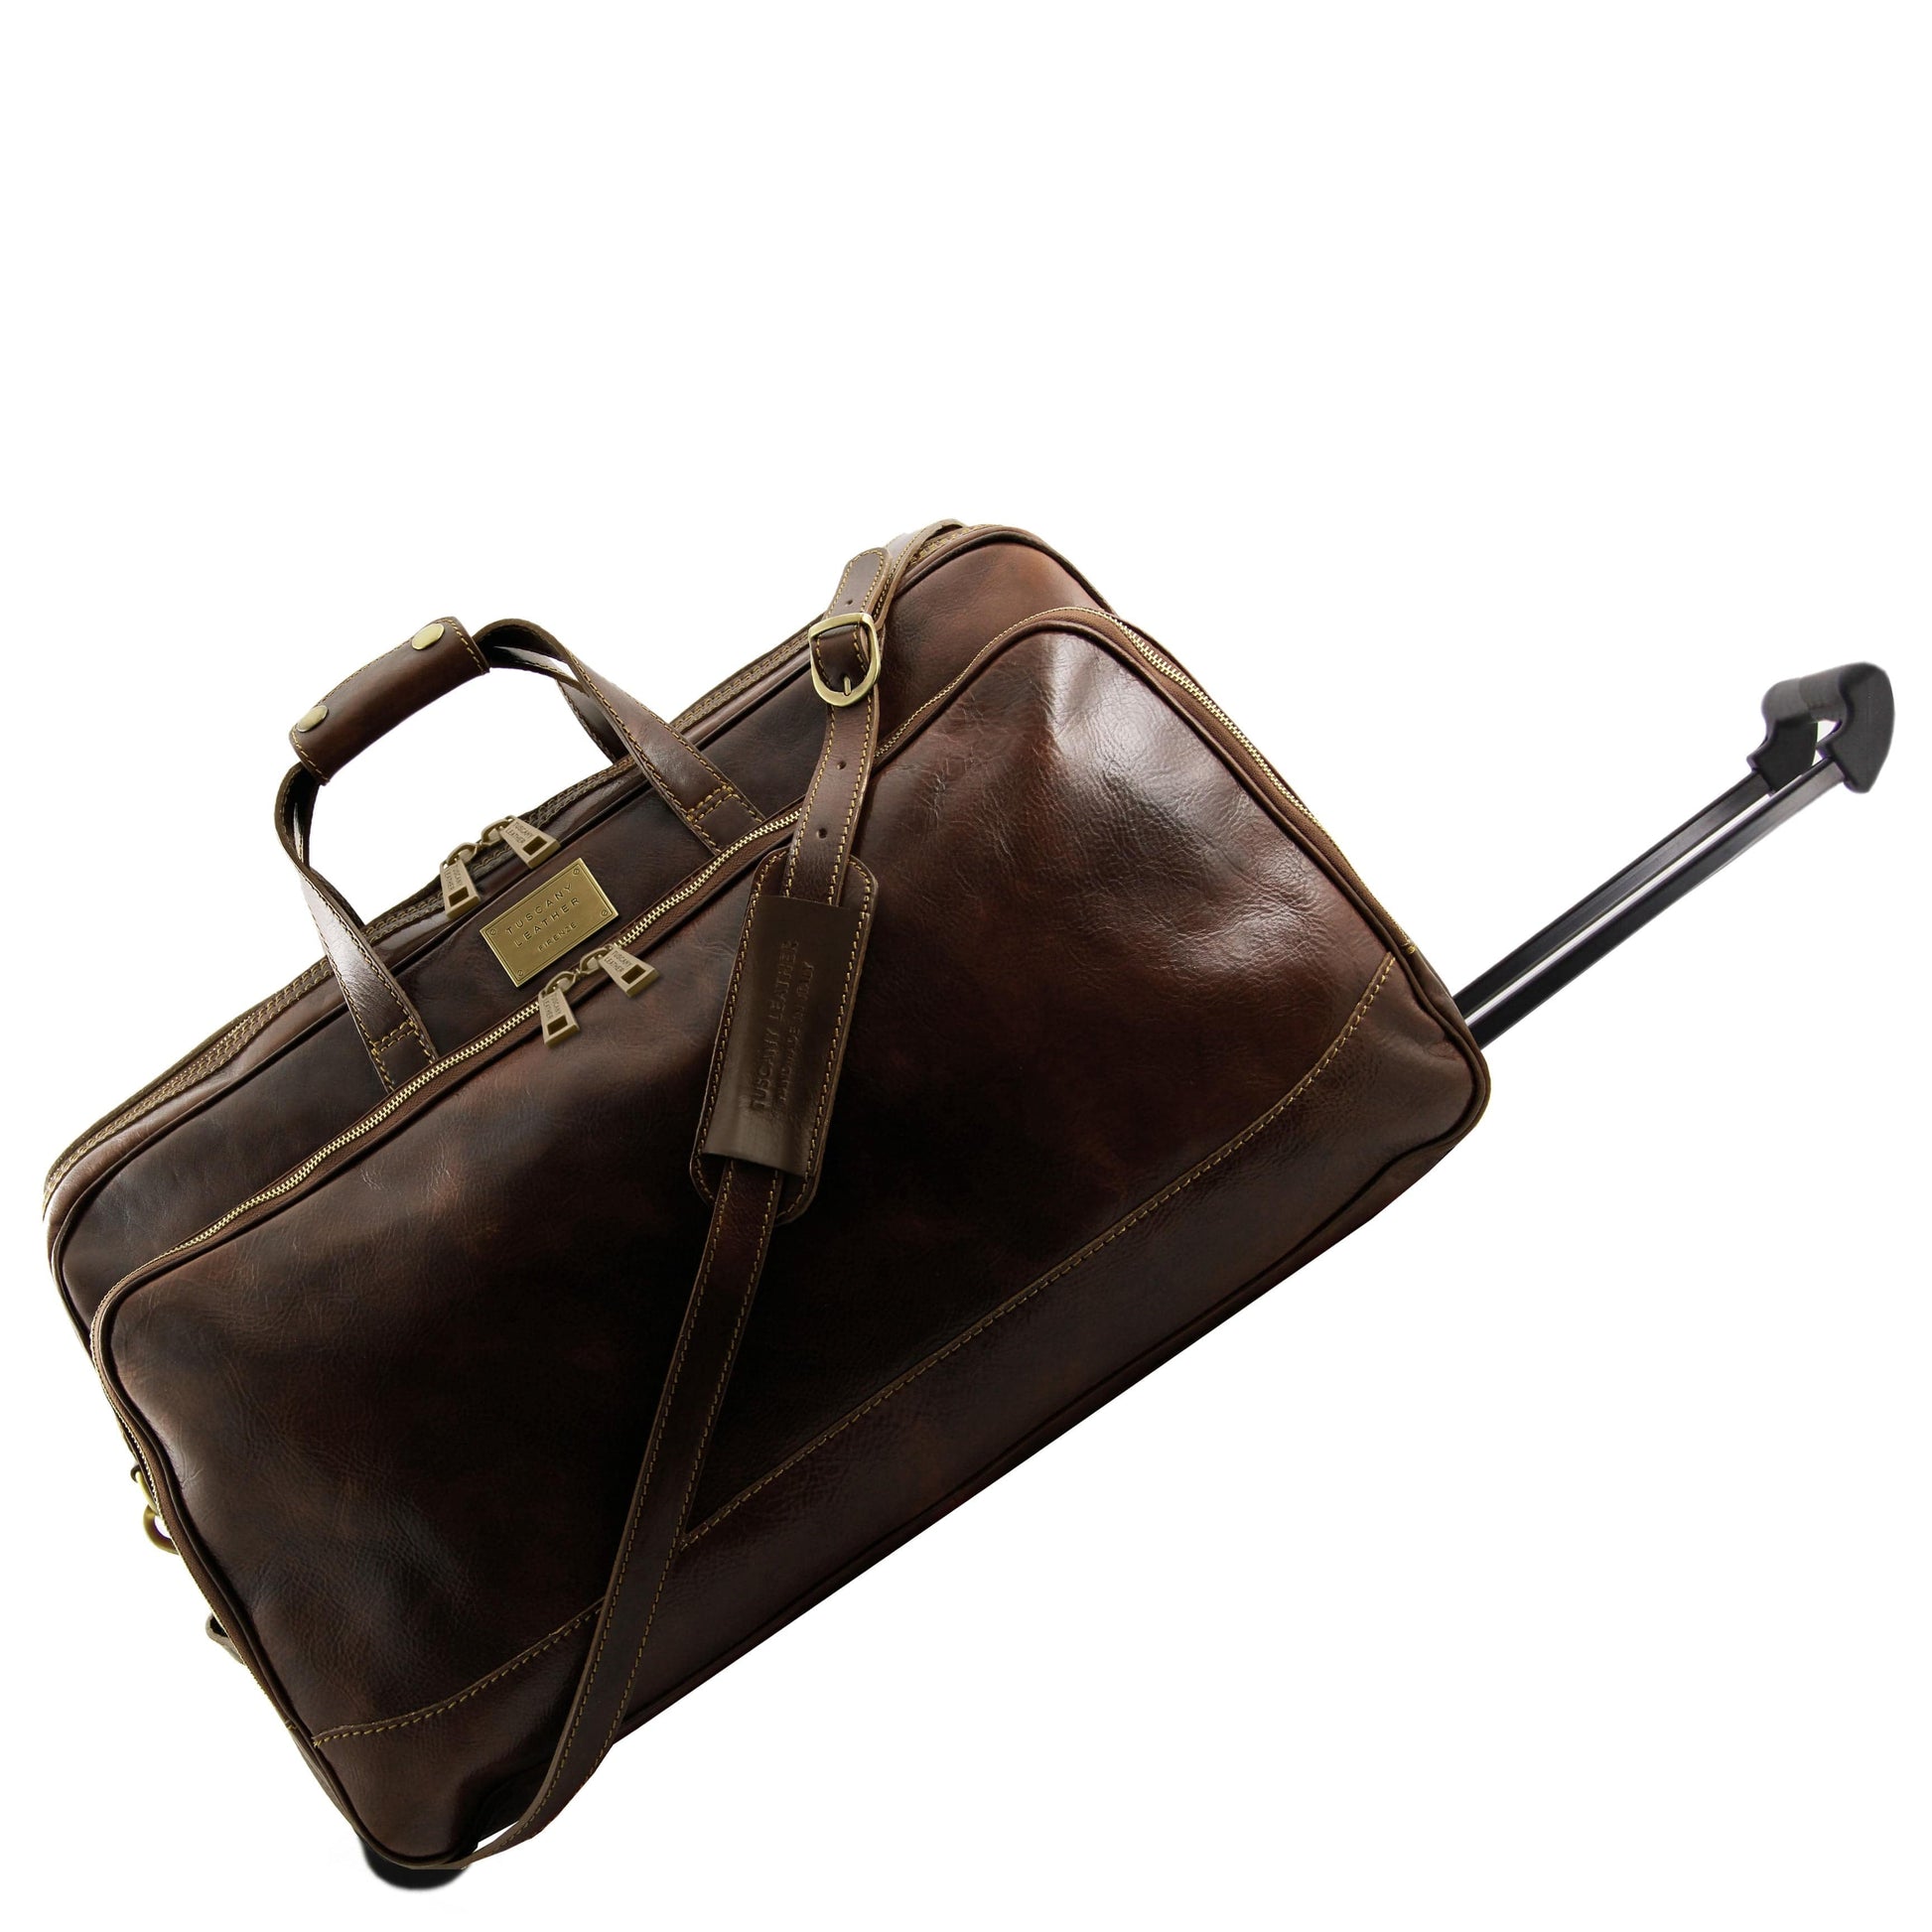 Bora Bora - Trolley leather bag - Small size | TL3065 - Premium Leather Wheeled luggage - Shop now at San Rocco Italia